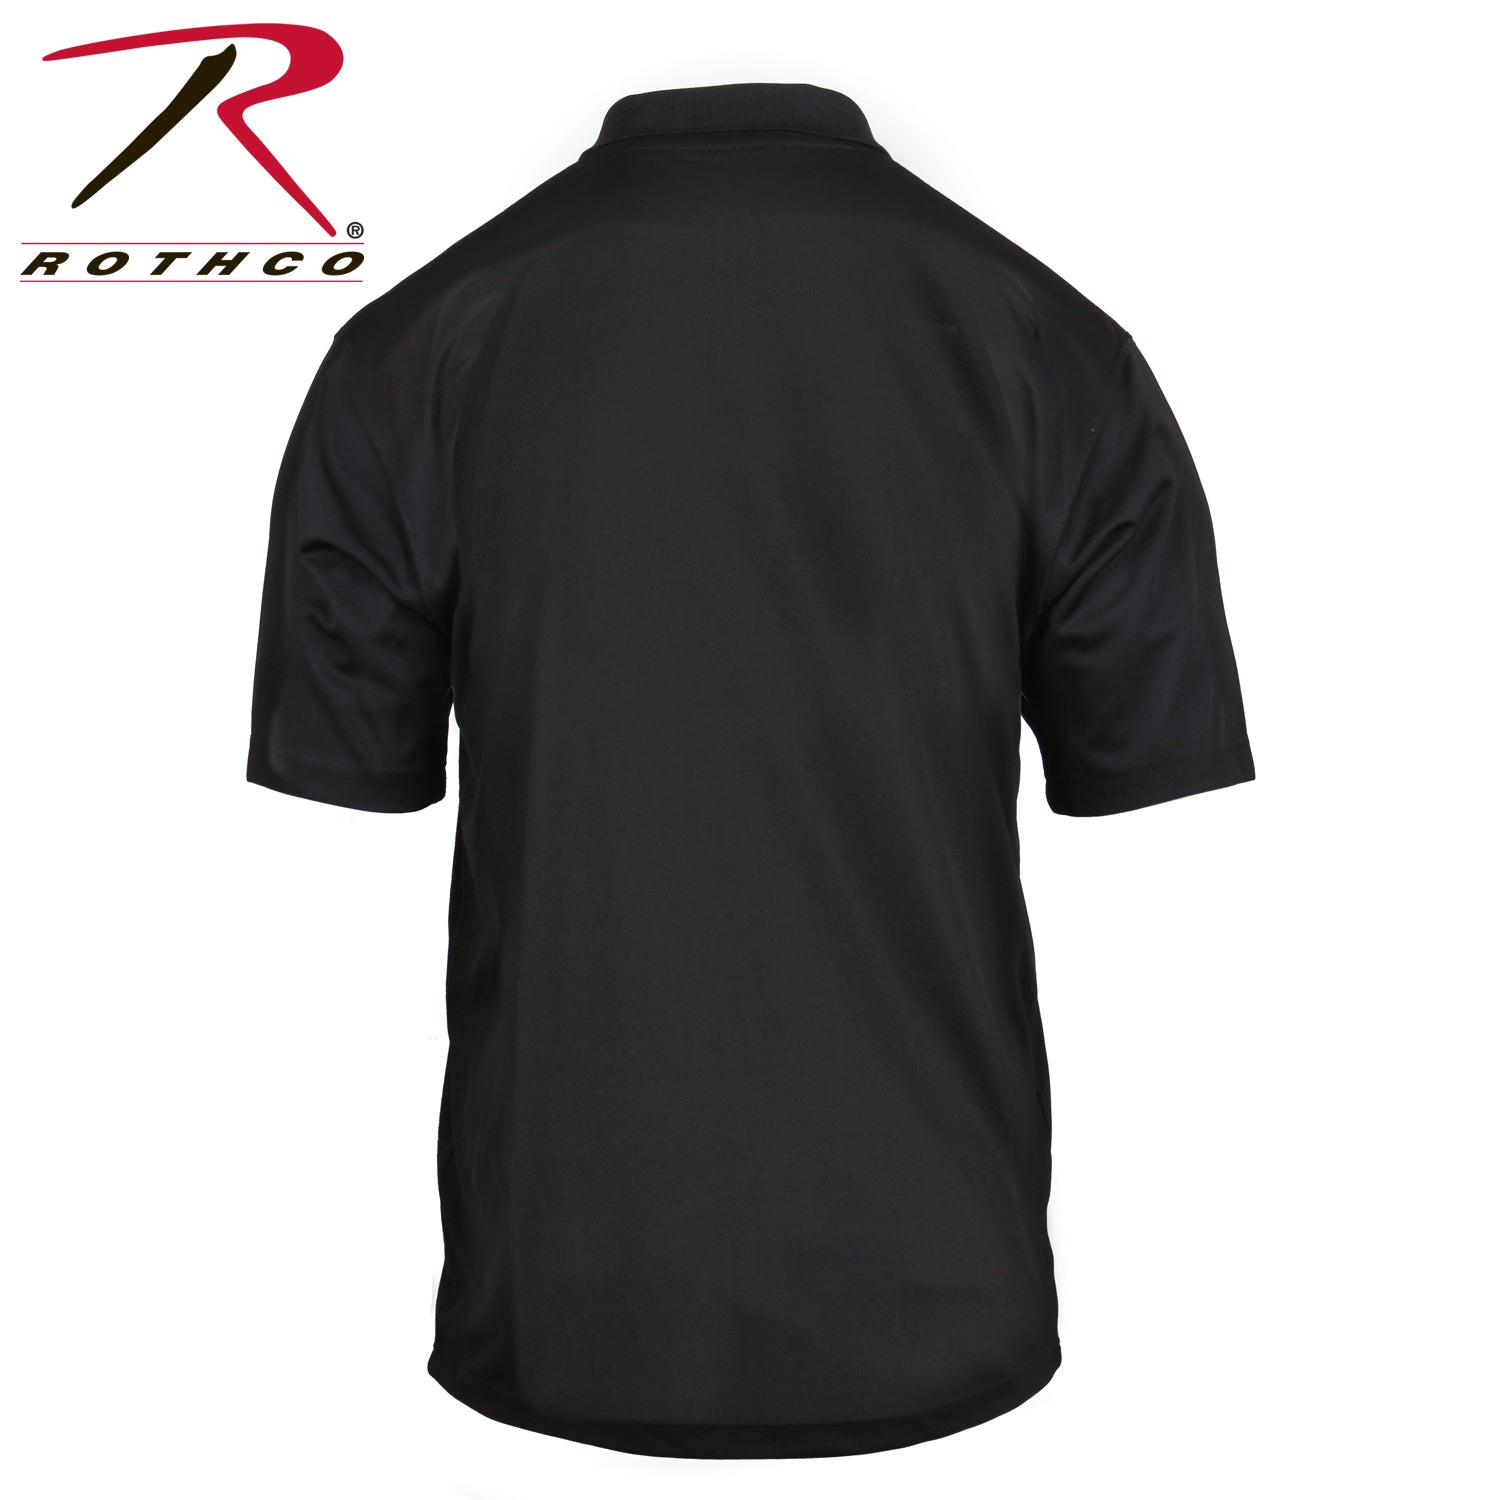 Rothco Moisture Wicking Police Polo Shirt